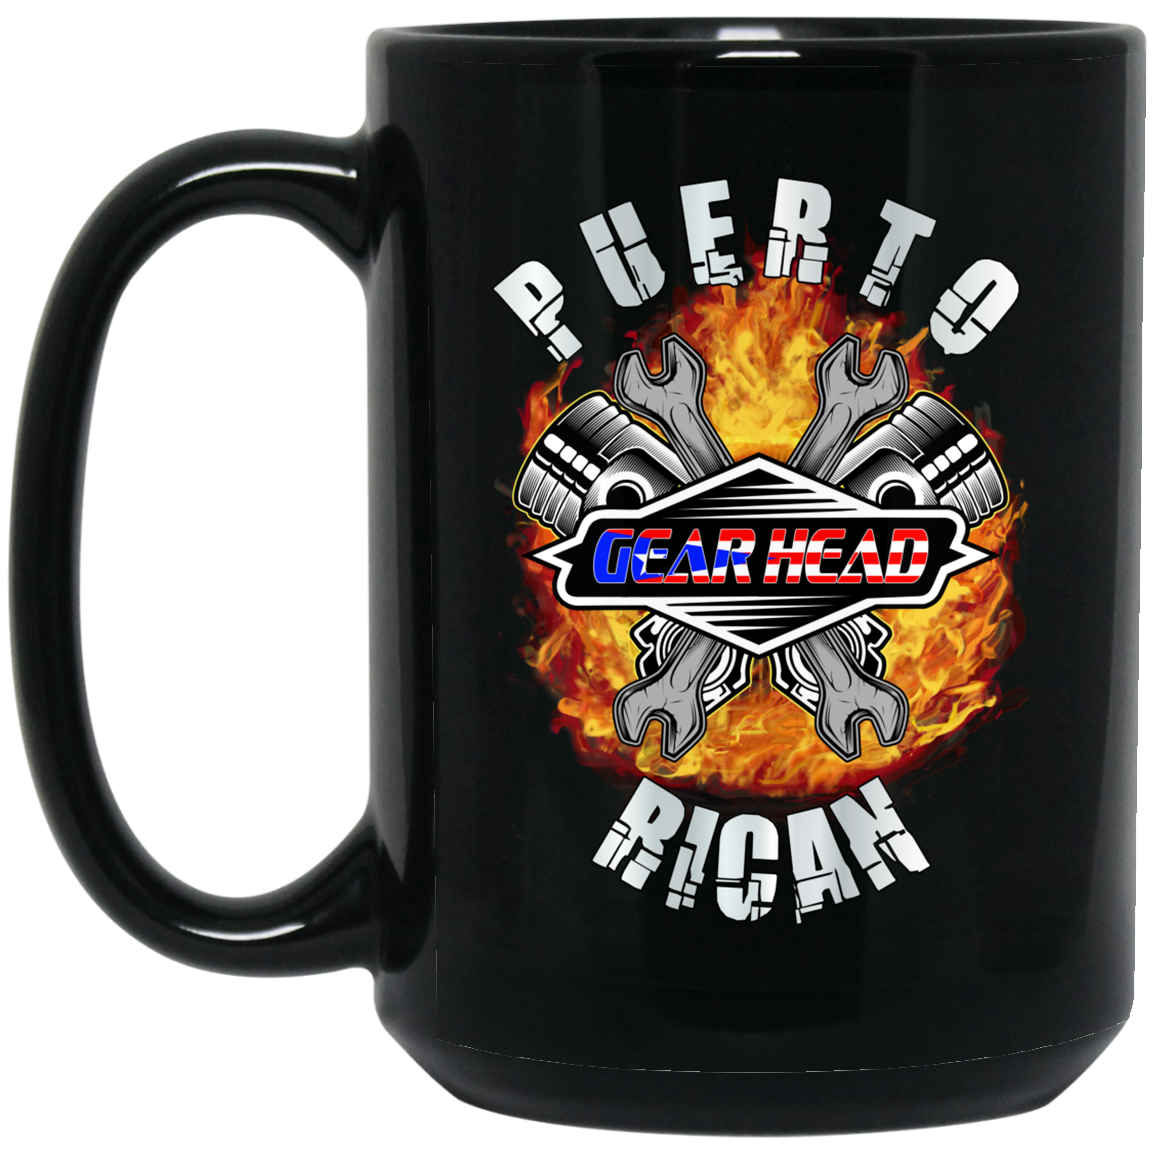 Puerto Rican GearHead Black Mug